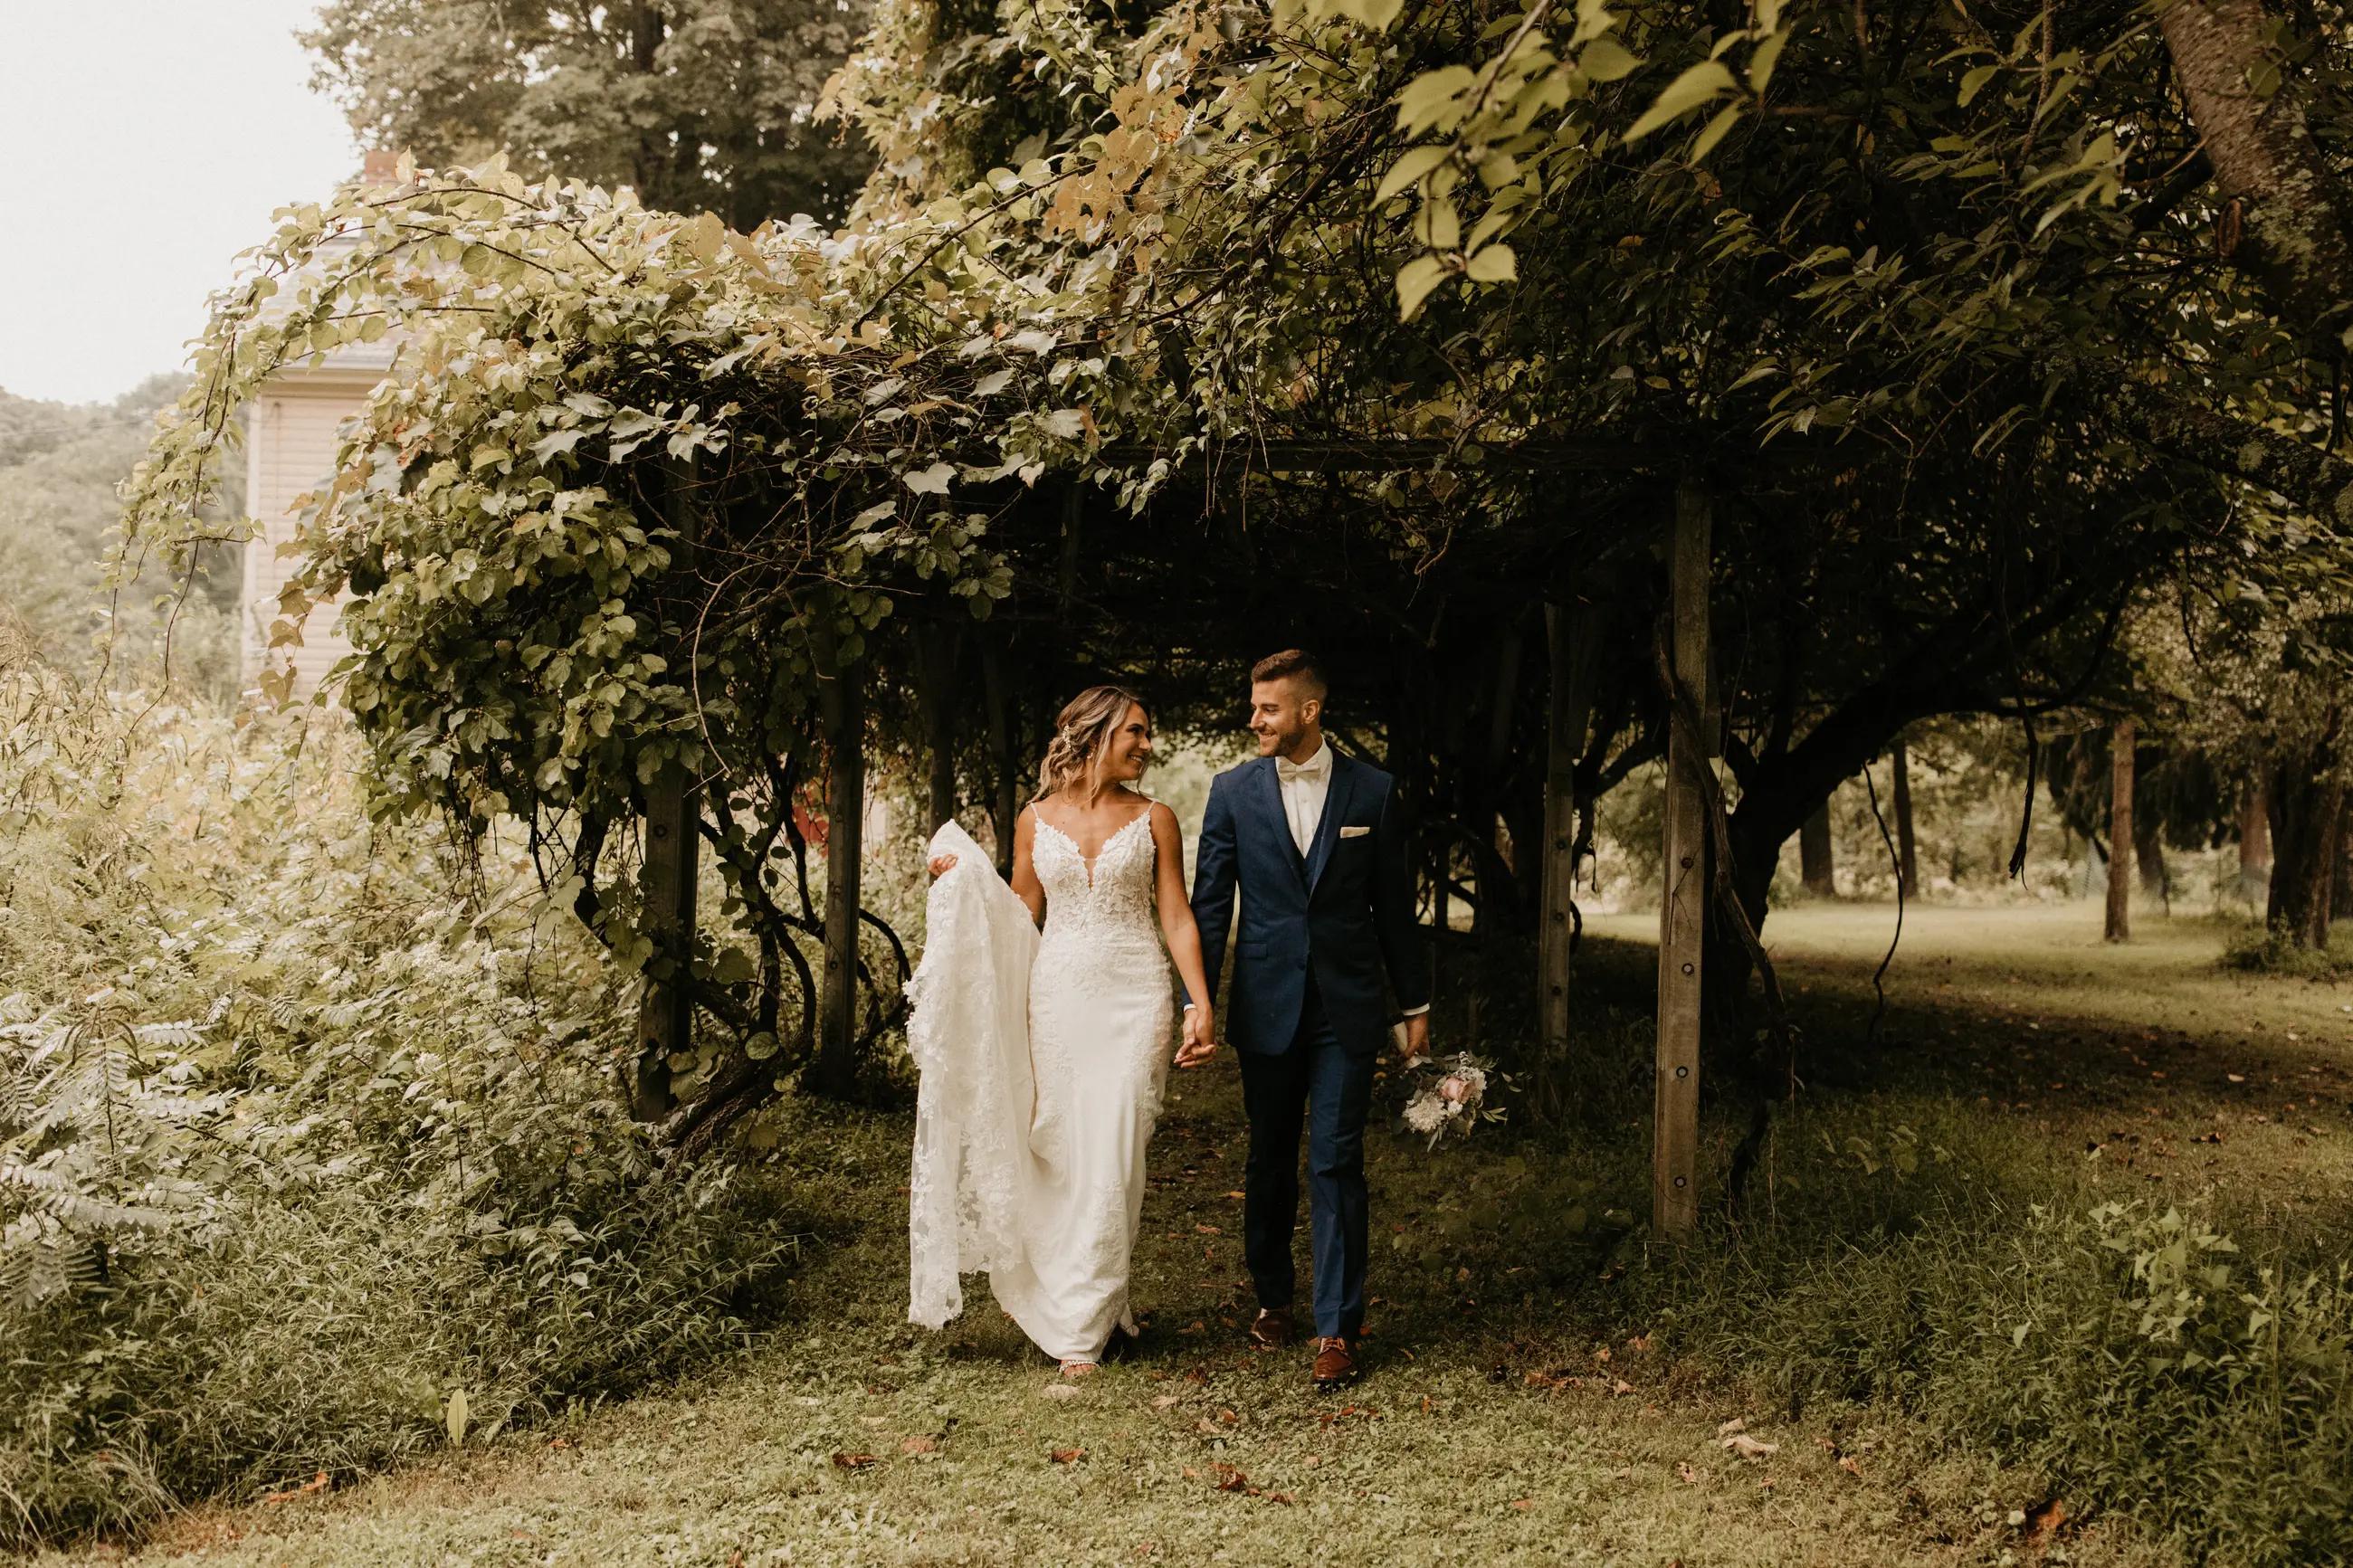 A Modern Fairytale: Justyna & Greg's Beautiful Outdoor Wedding